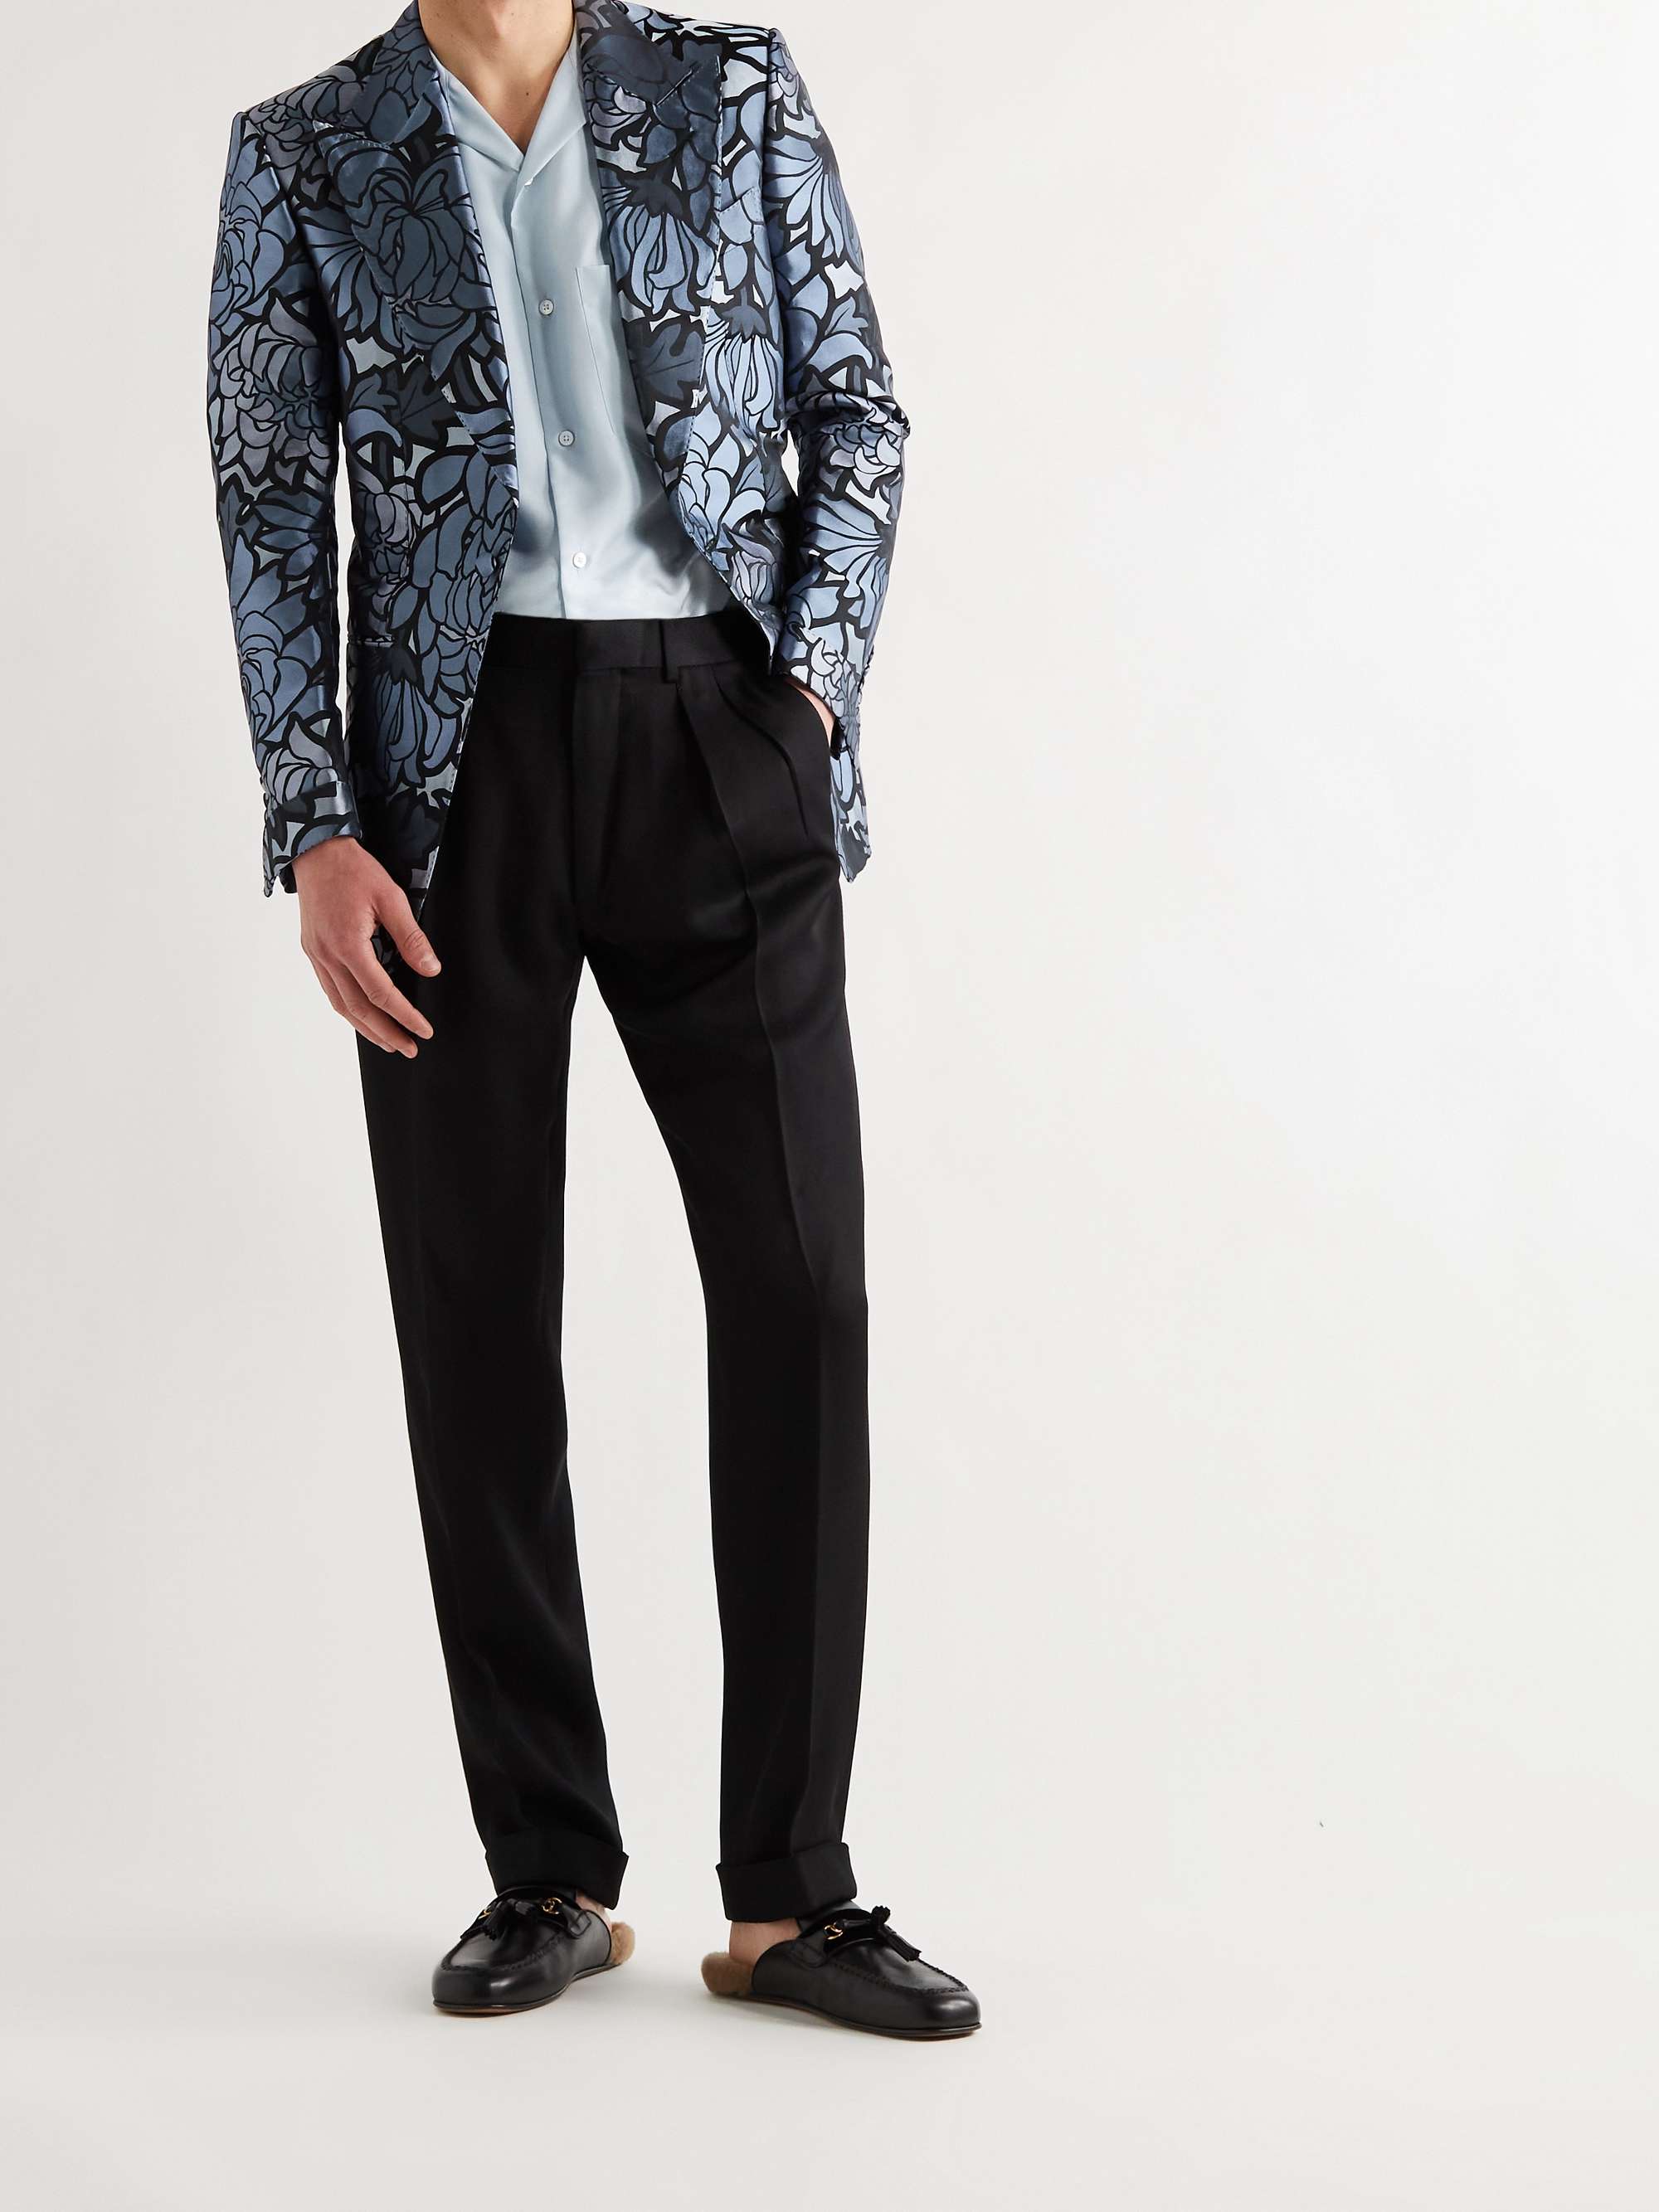 TOM FORD Atticus Slim-Fit Silk-Blend Jacquard Tuxedo Jacket